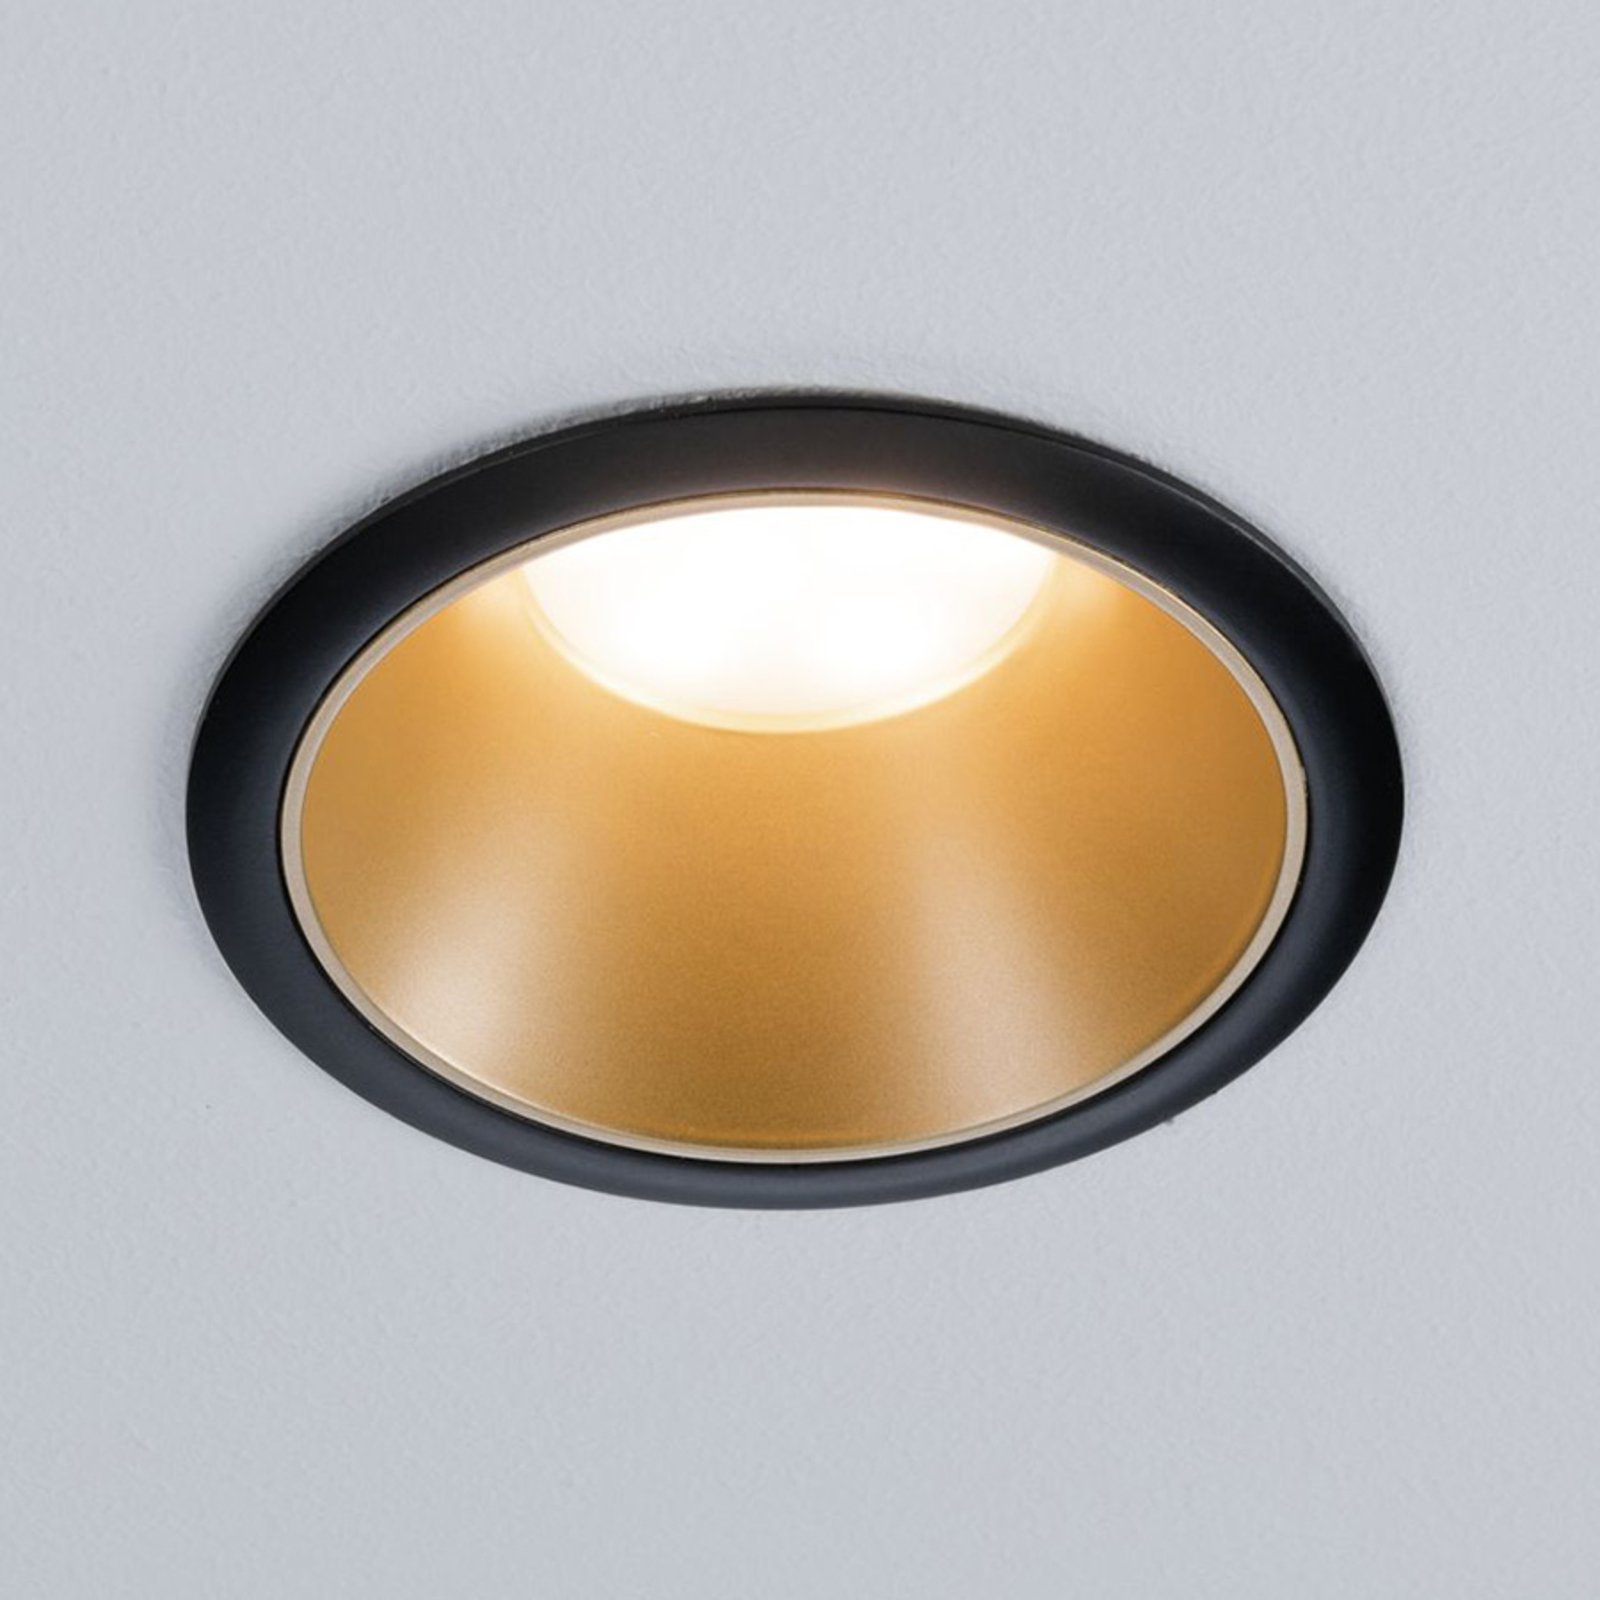 Paulmann Cole spotlight LED, dorado-negro, set 3